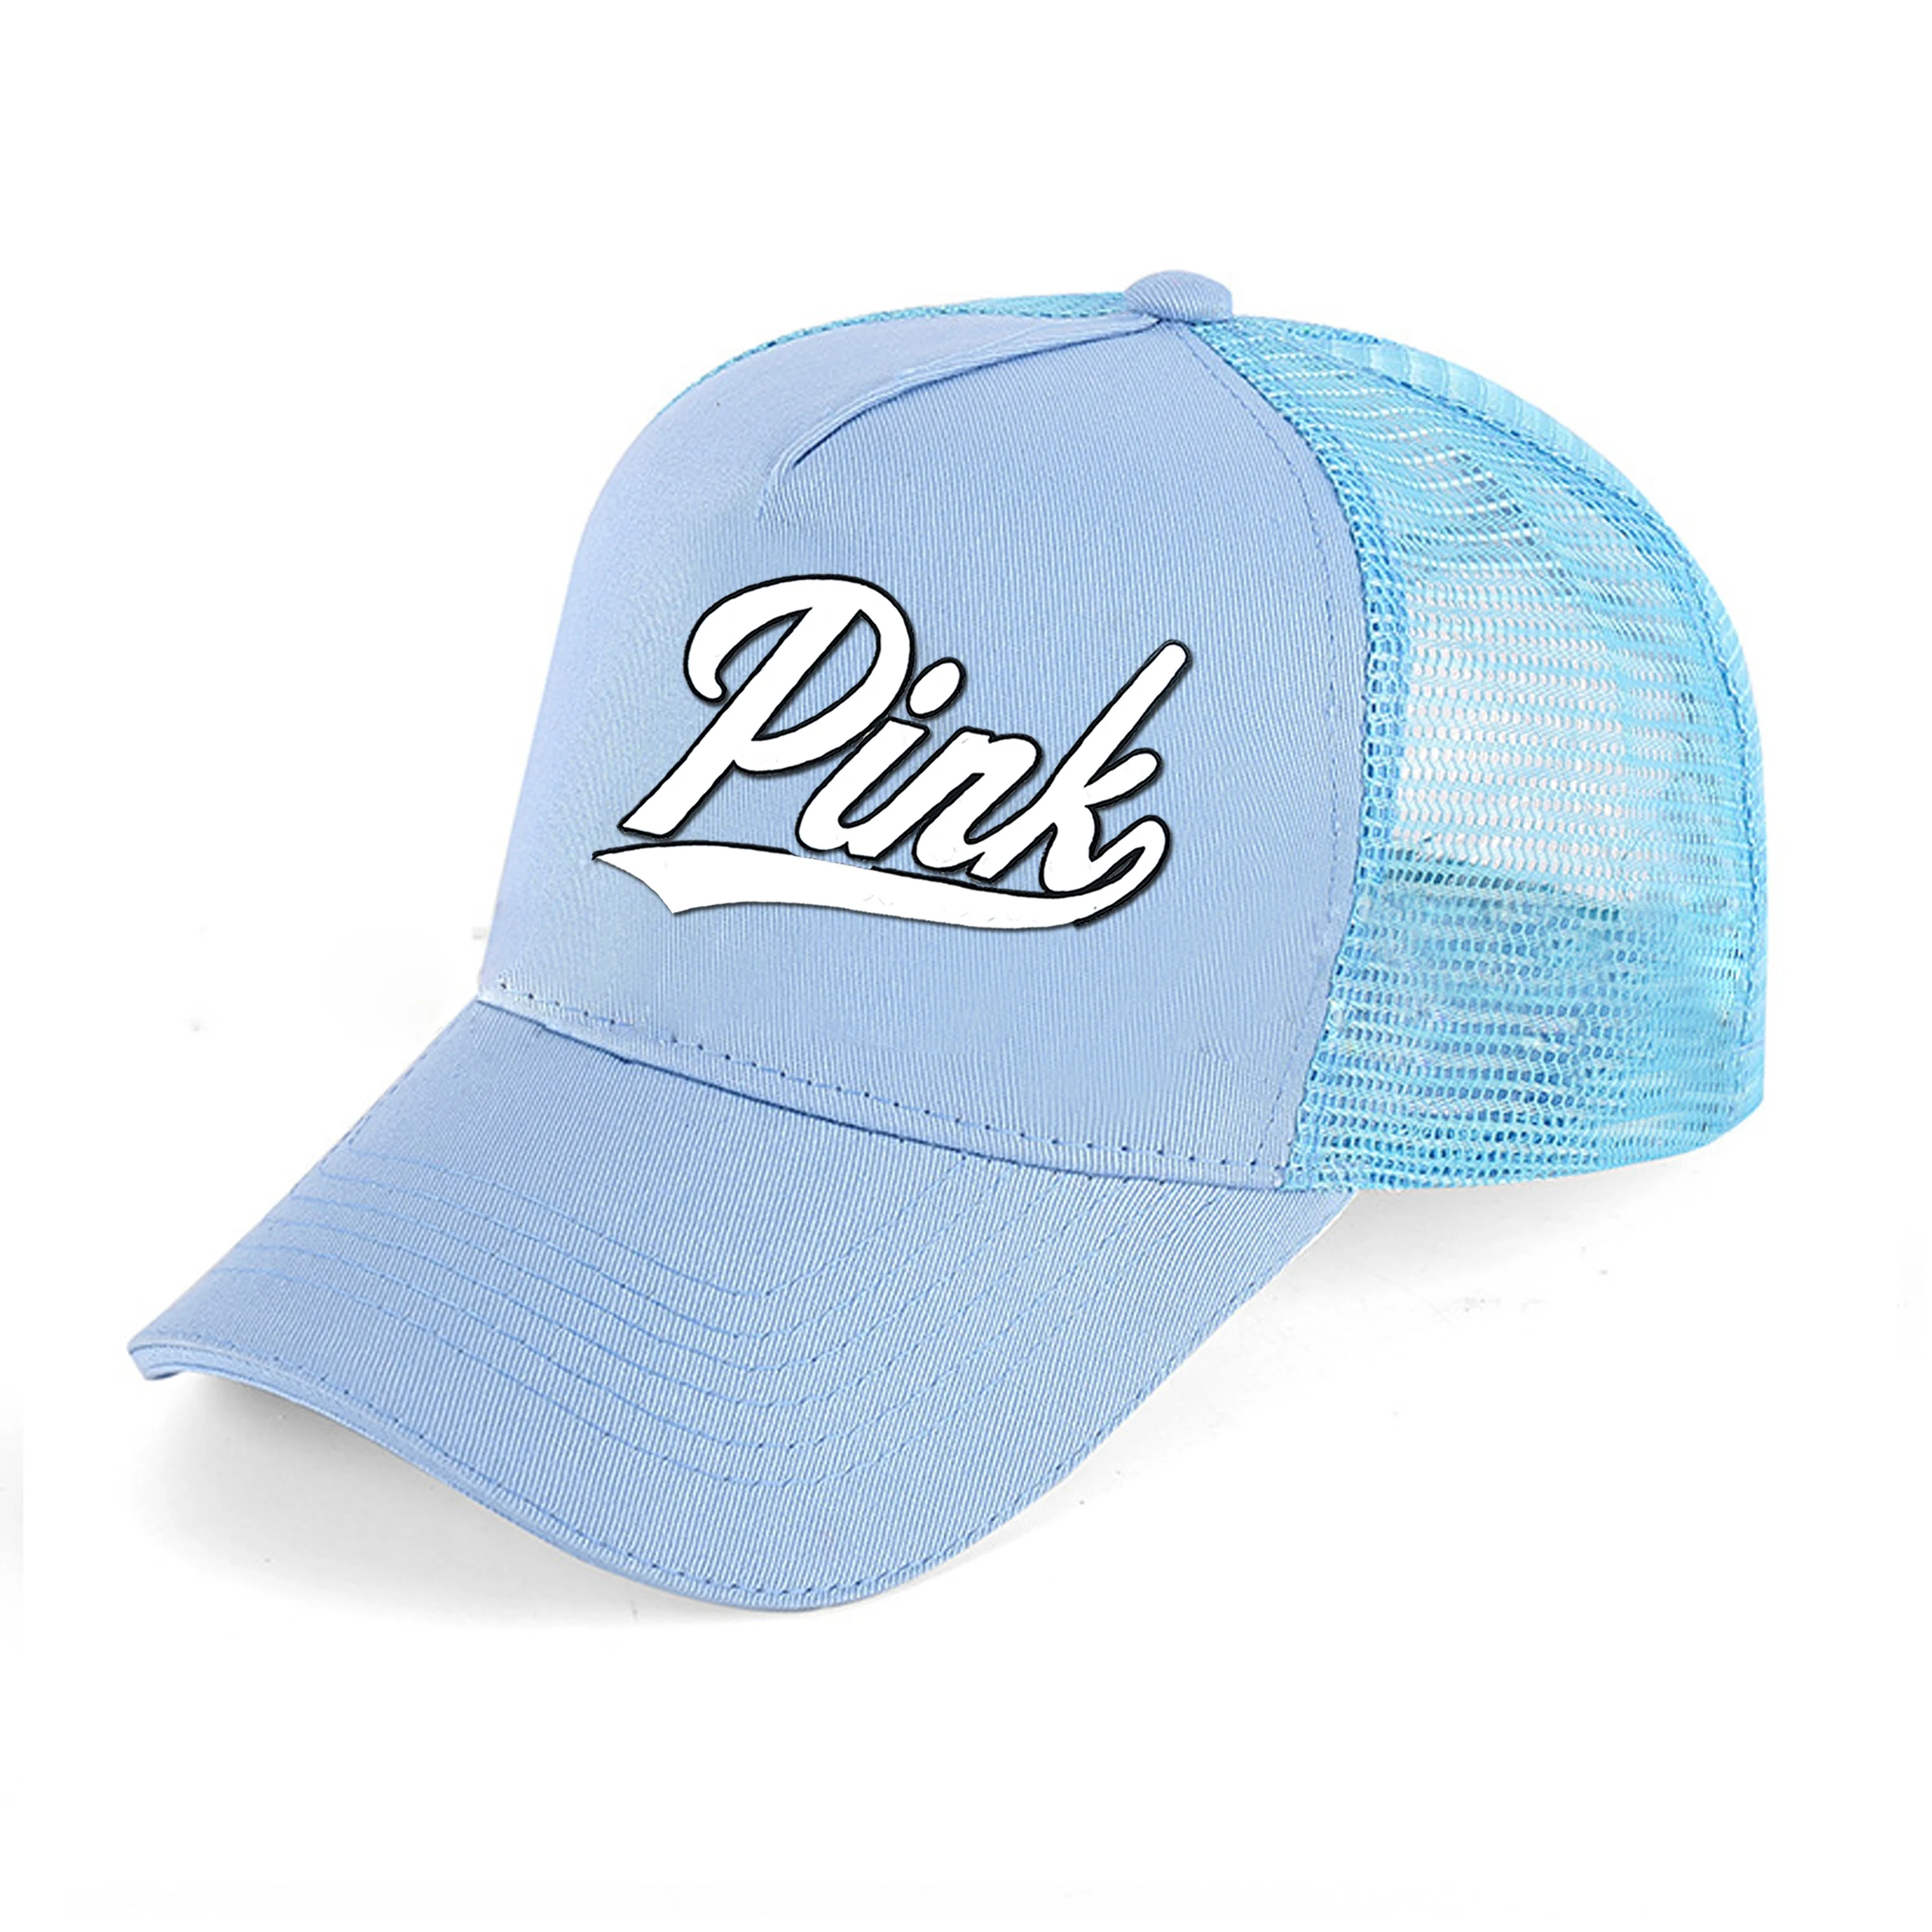 Unisex Fashion PINK Baseball Cap Women Snapback Hat Adjustable Black Pink White Cap Outdoor Climbing Cap